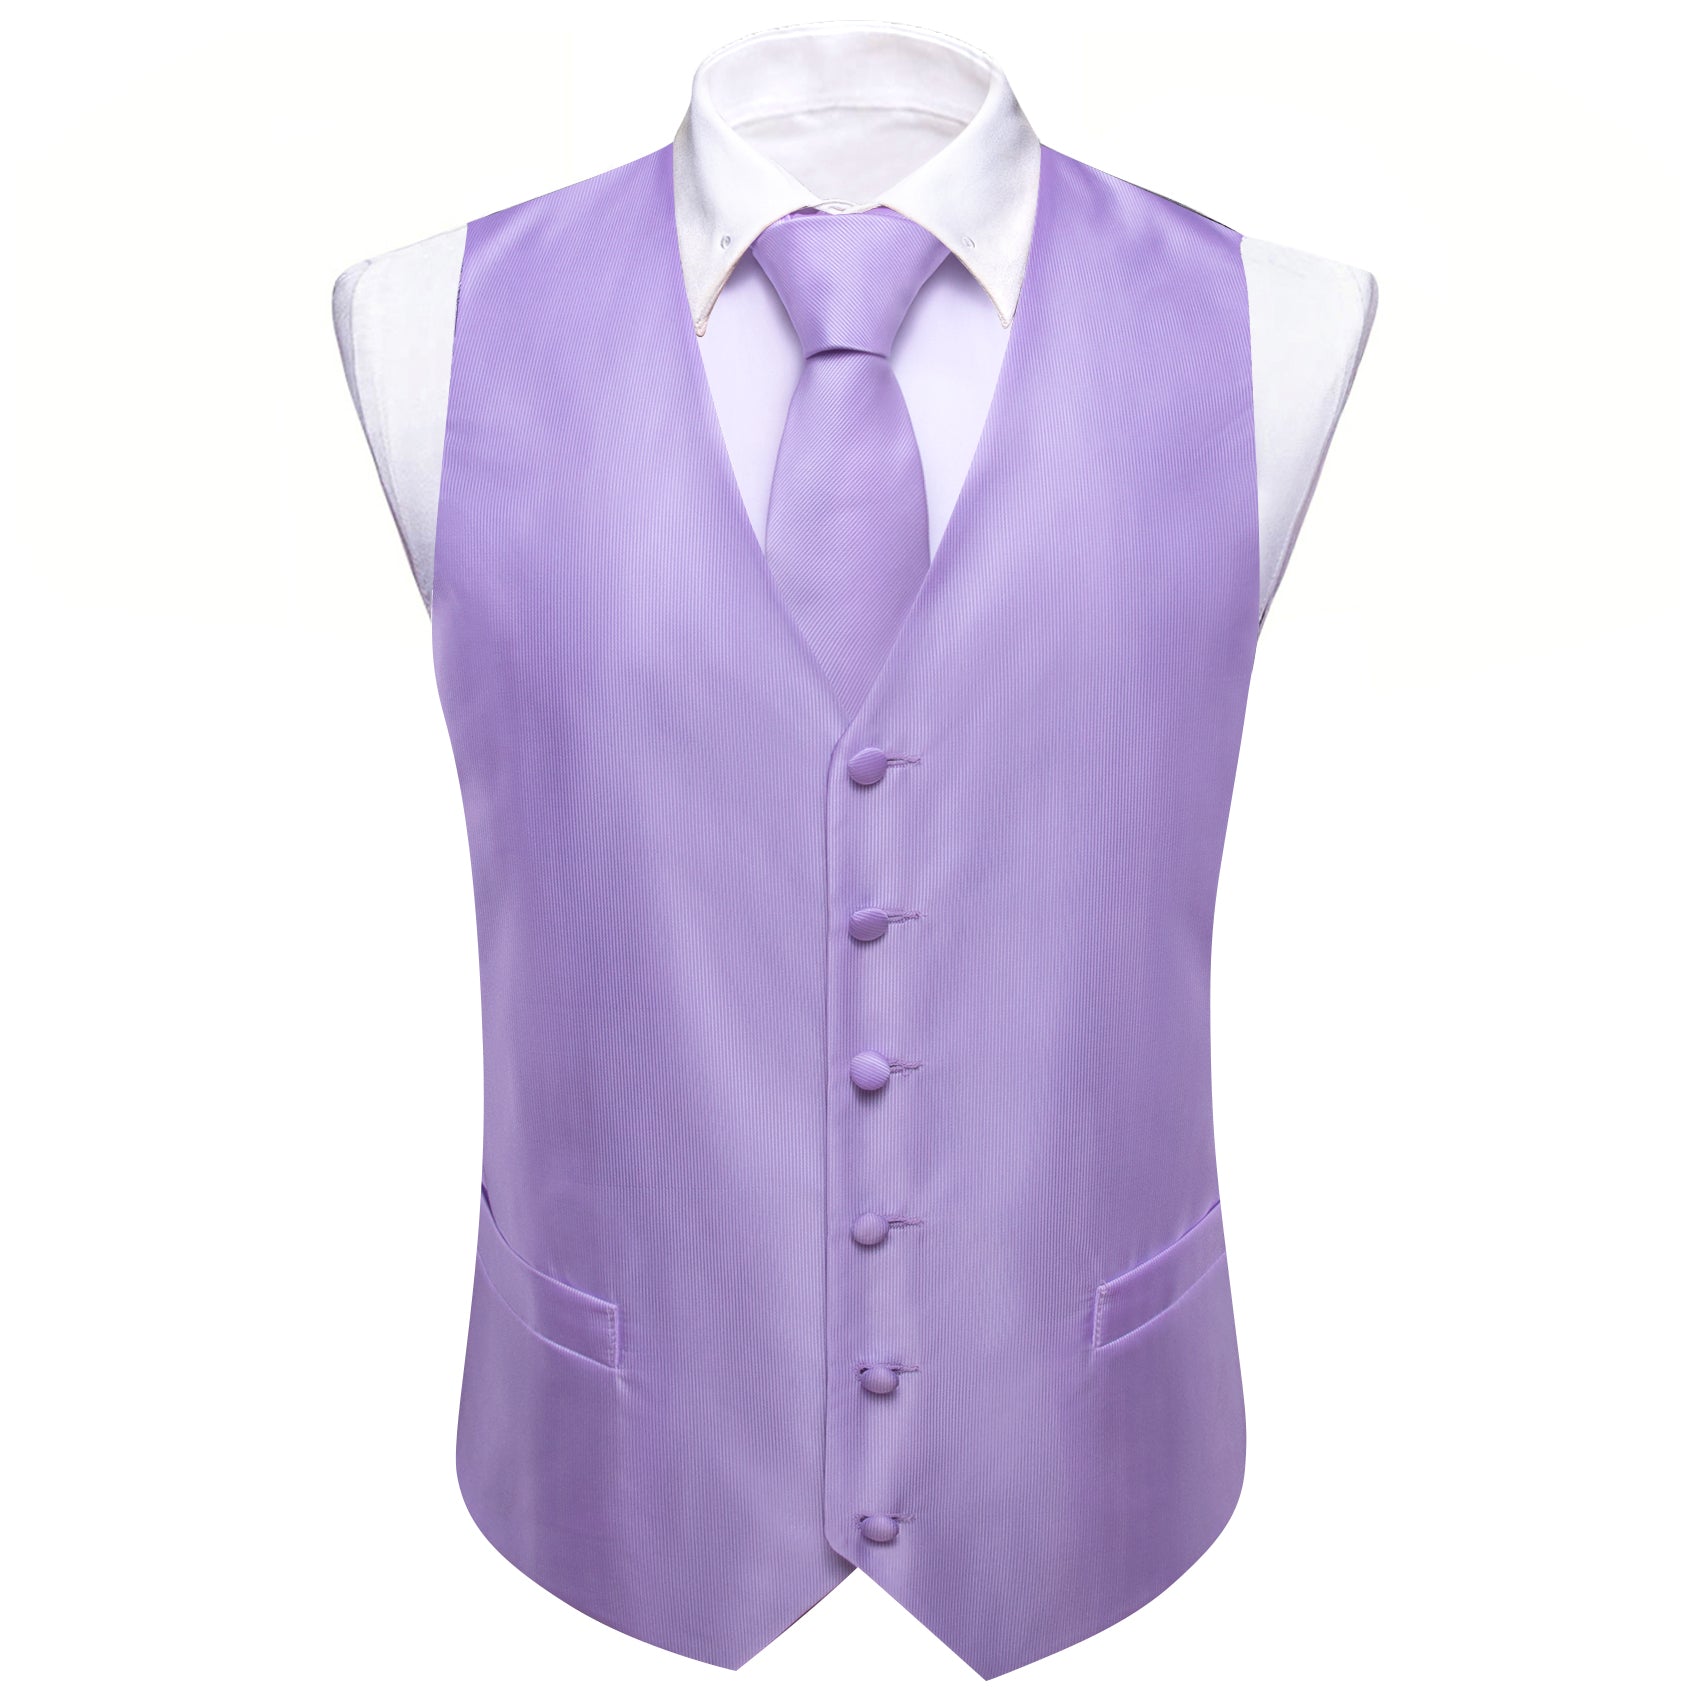 mens dress vests 6 buttons  Light Purple Waist coat Button up shirts 